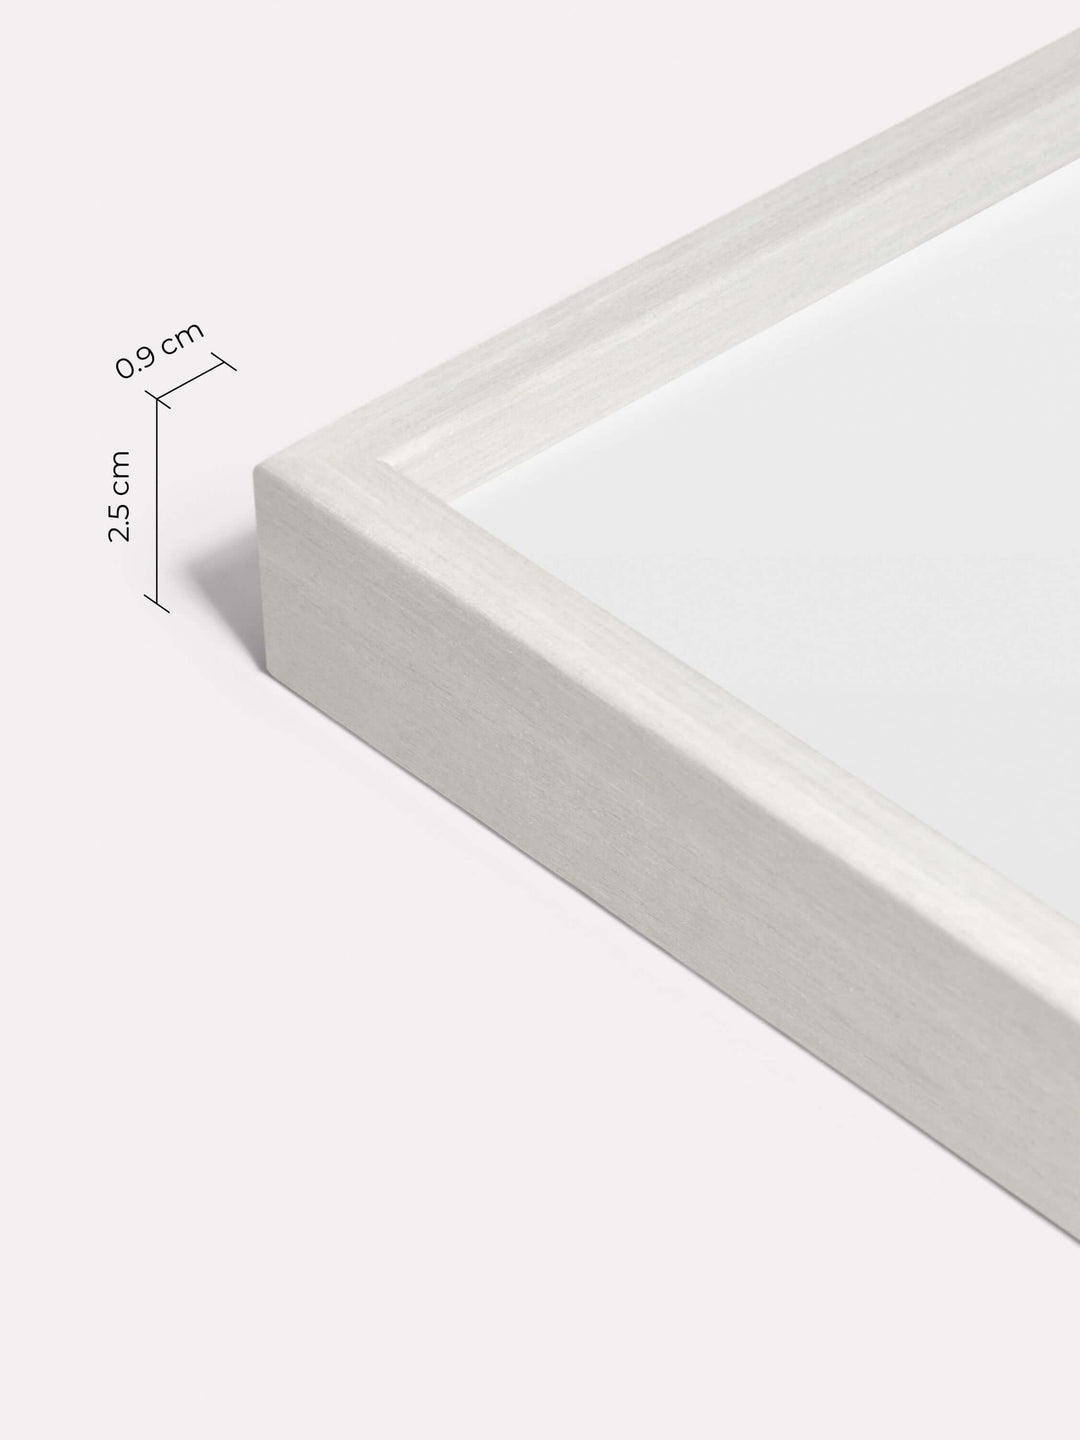 Thin Frame, White, 13x18 cm - Close-up view